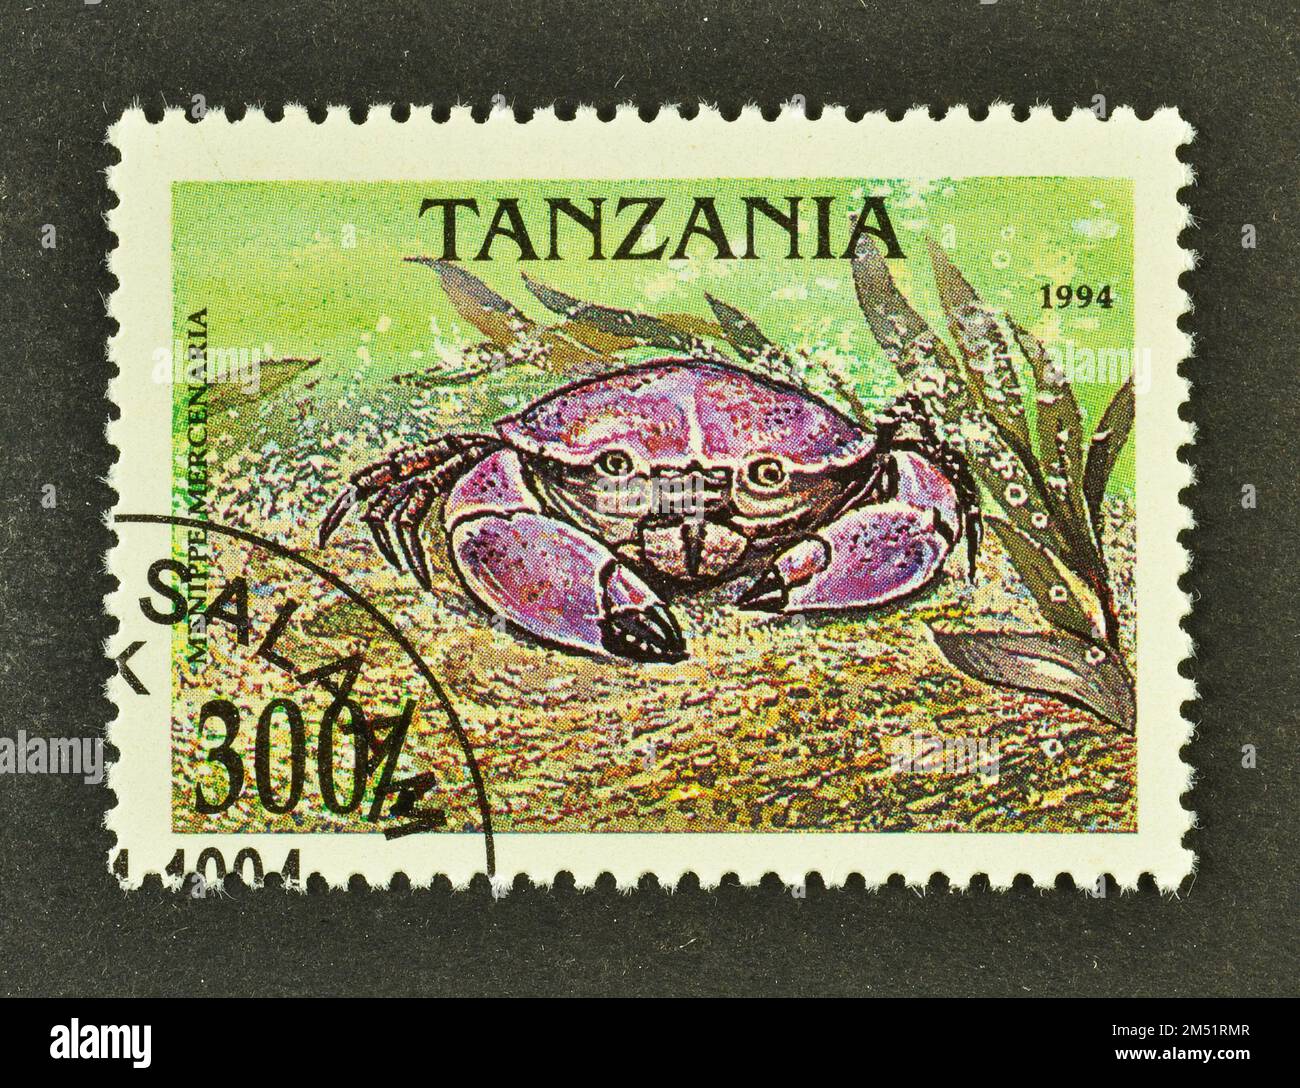 Cancelled postage stamp printed by Tanzania, that shows Florida Stone Crab (Menippe mercenaria), circa 1994. Stock Photo